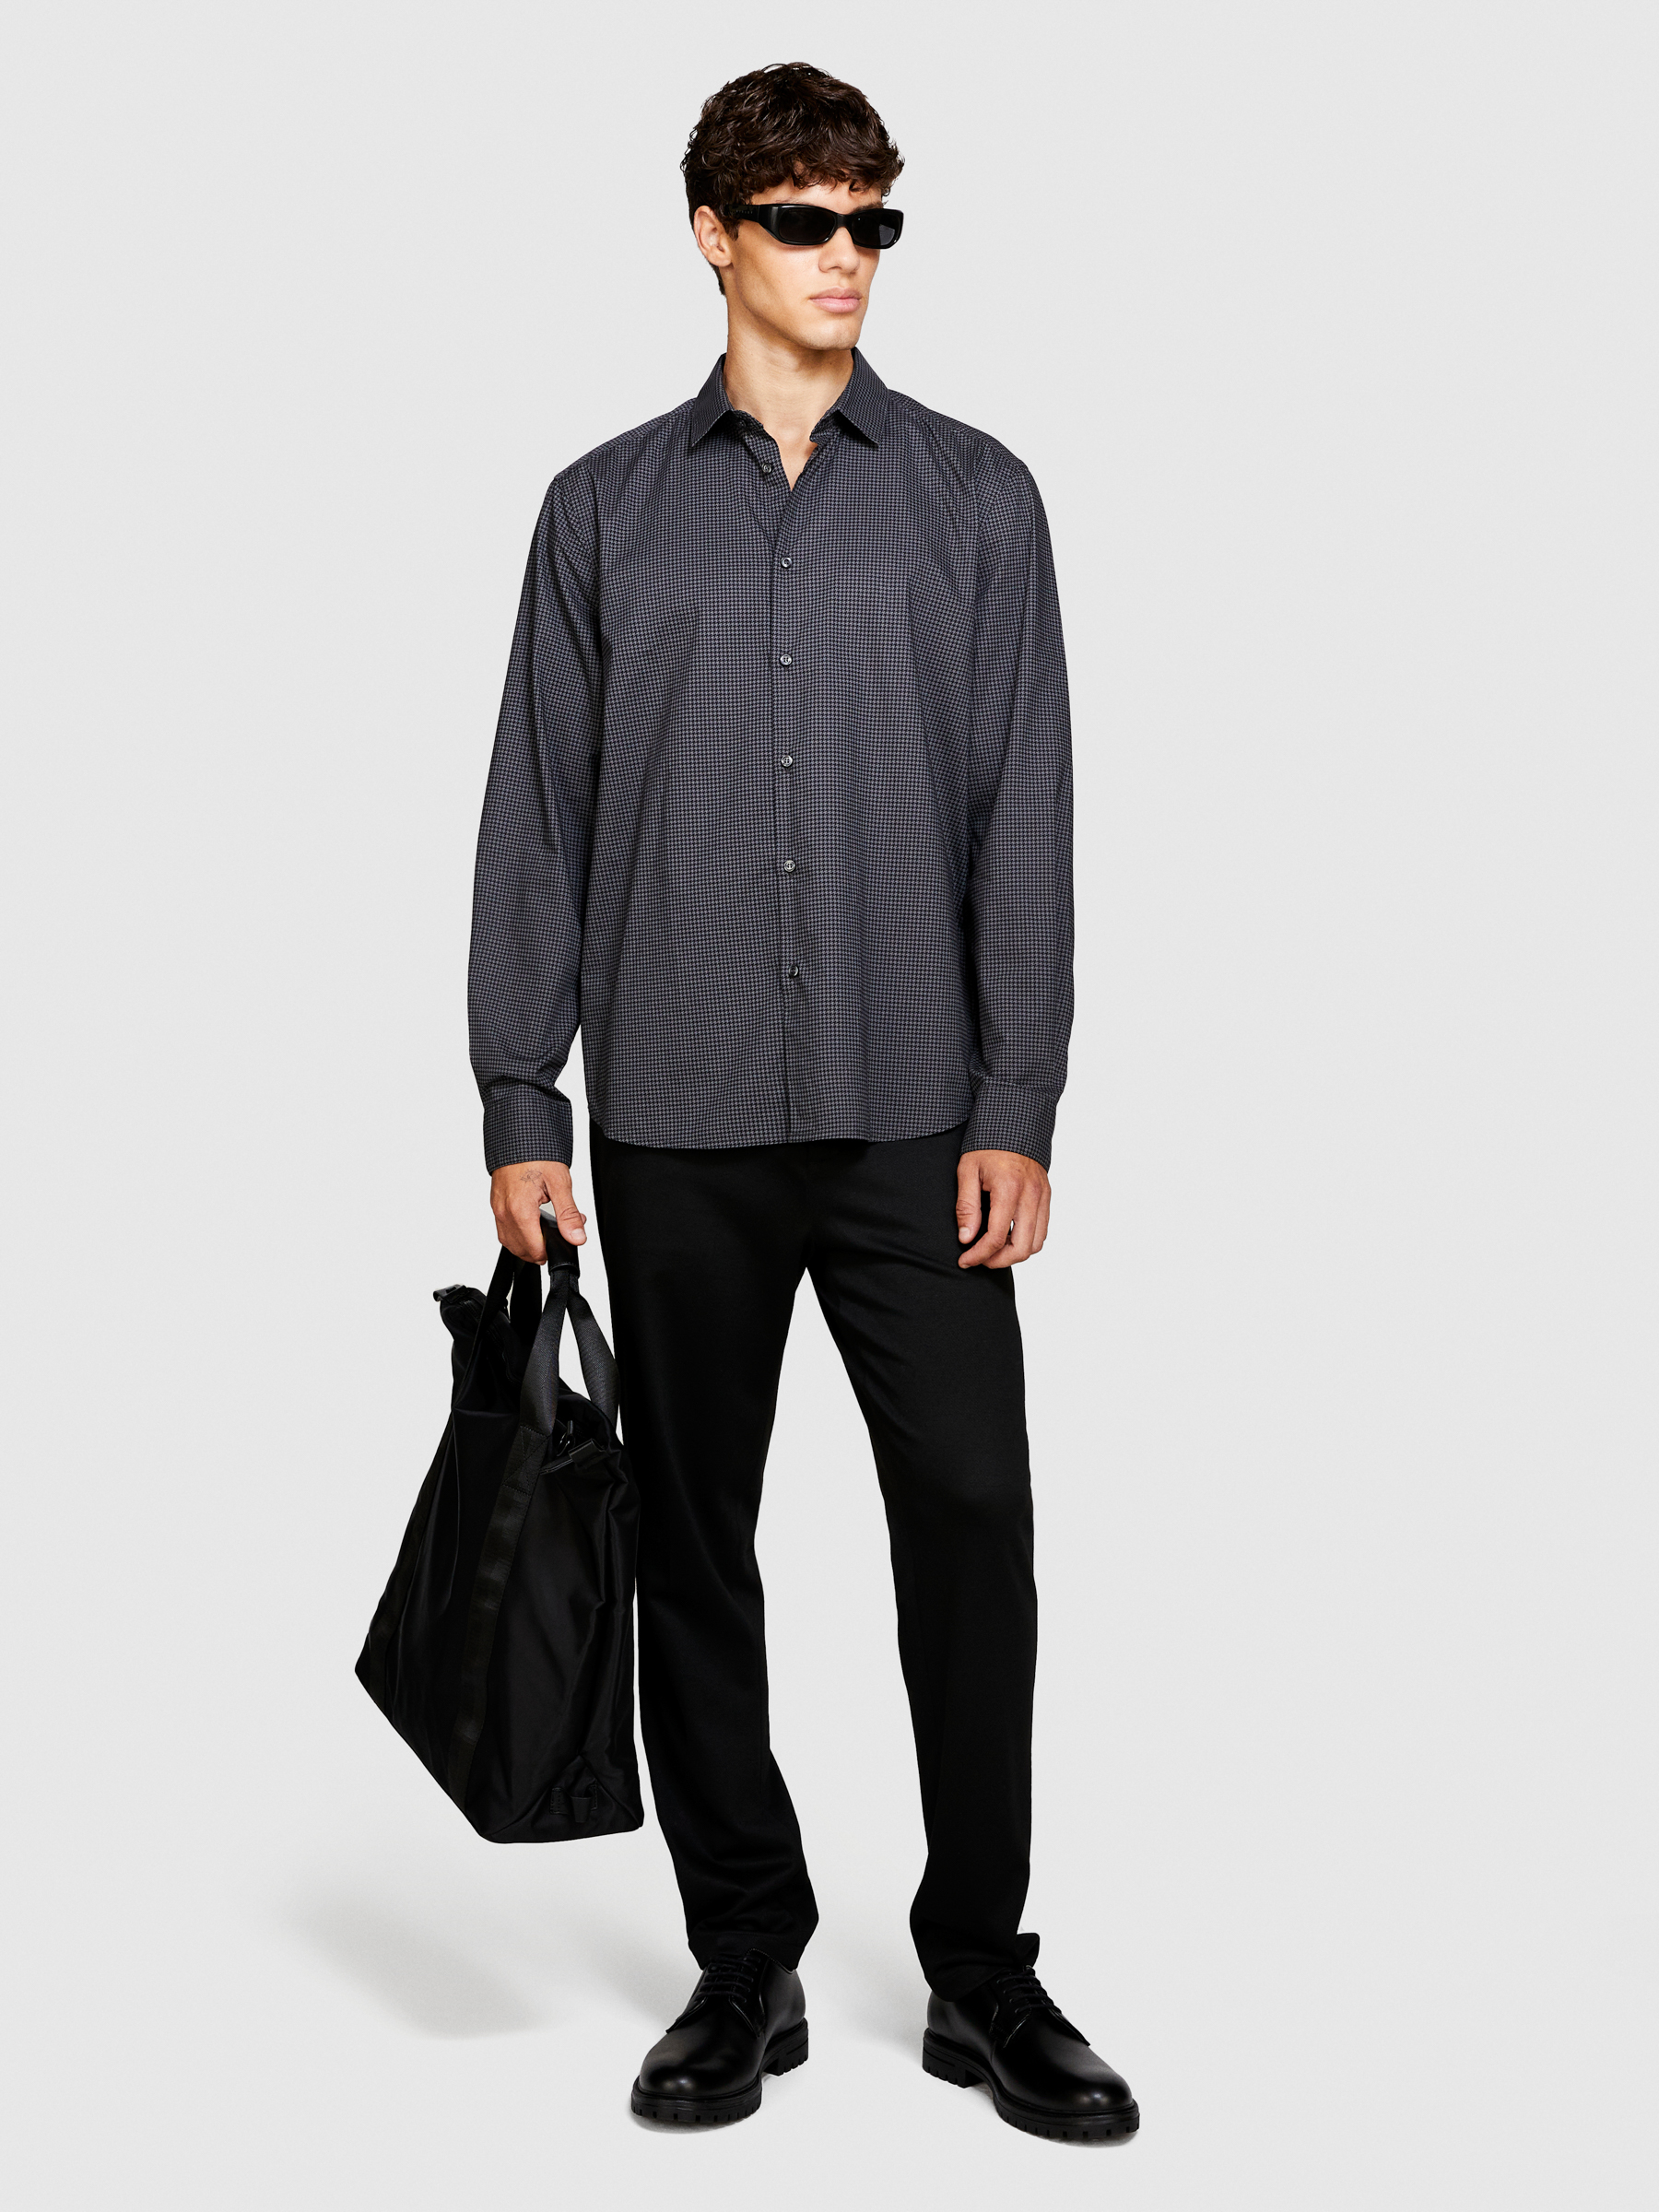 Sisley - Printed Shirt, Man, Dark Gray, Size: M